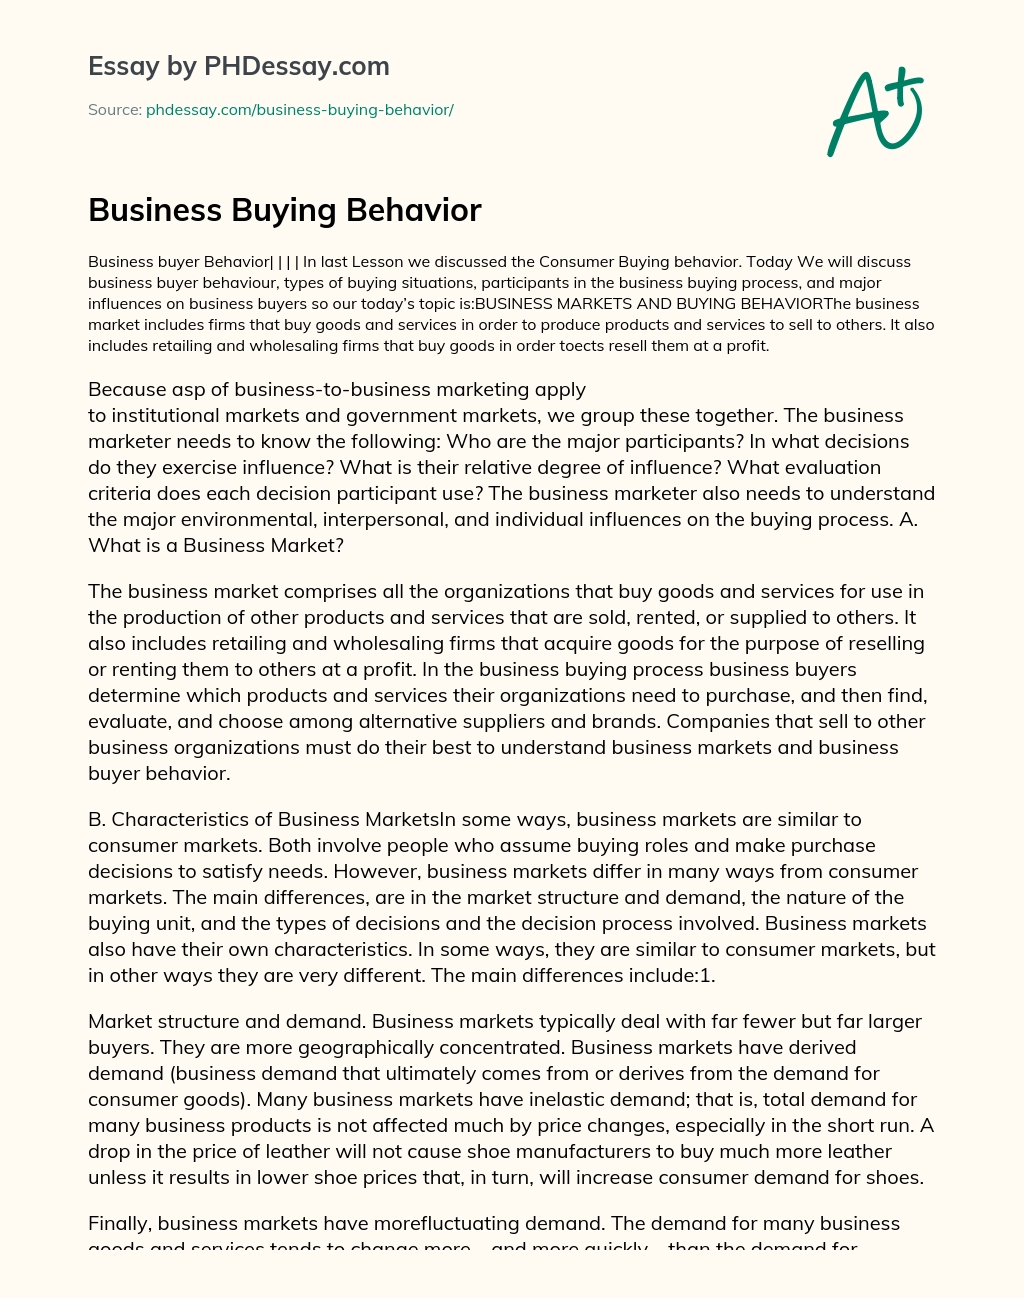 Business Buying Behavior essay